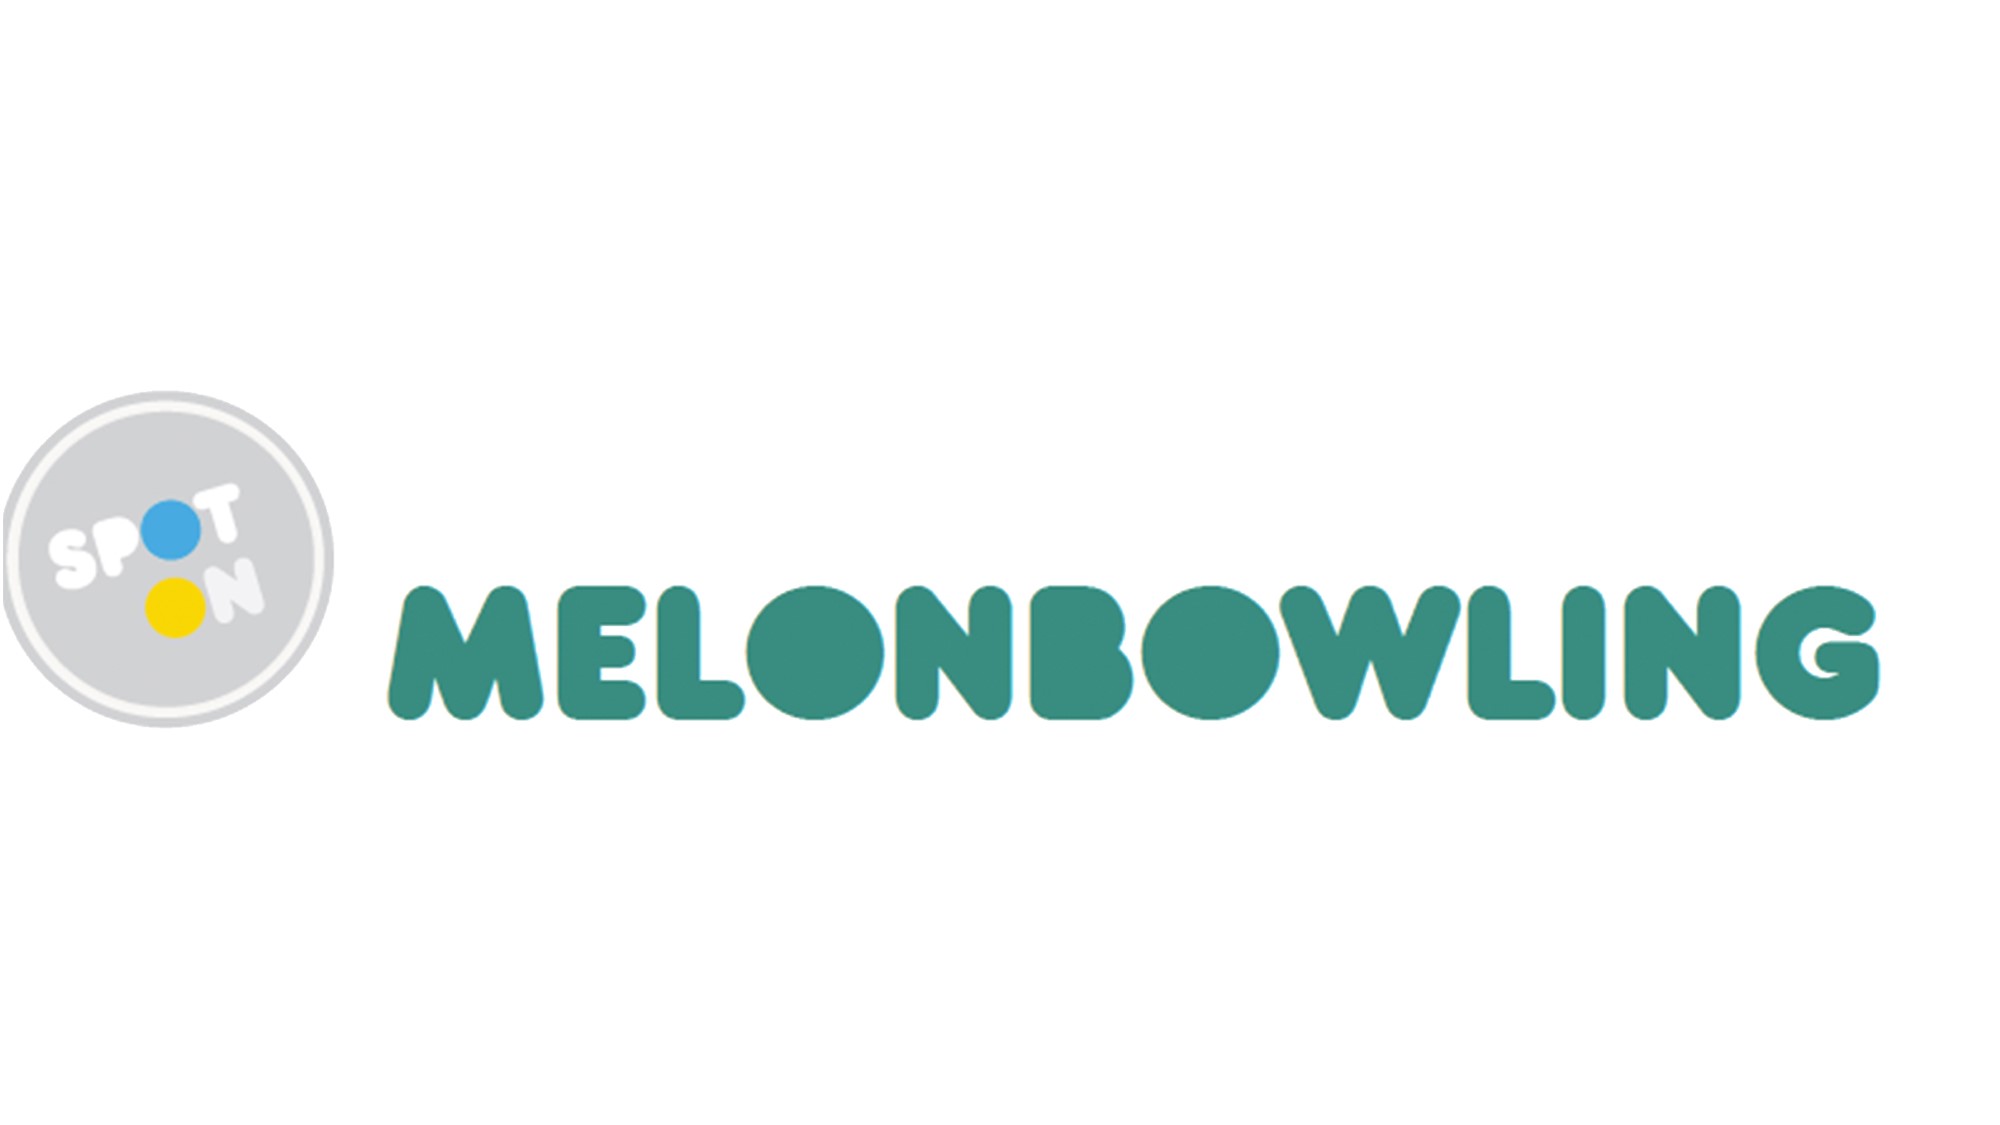 Melonbowling